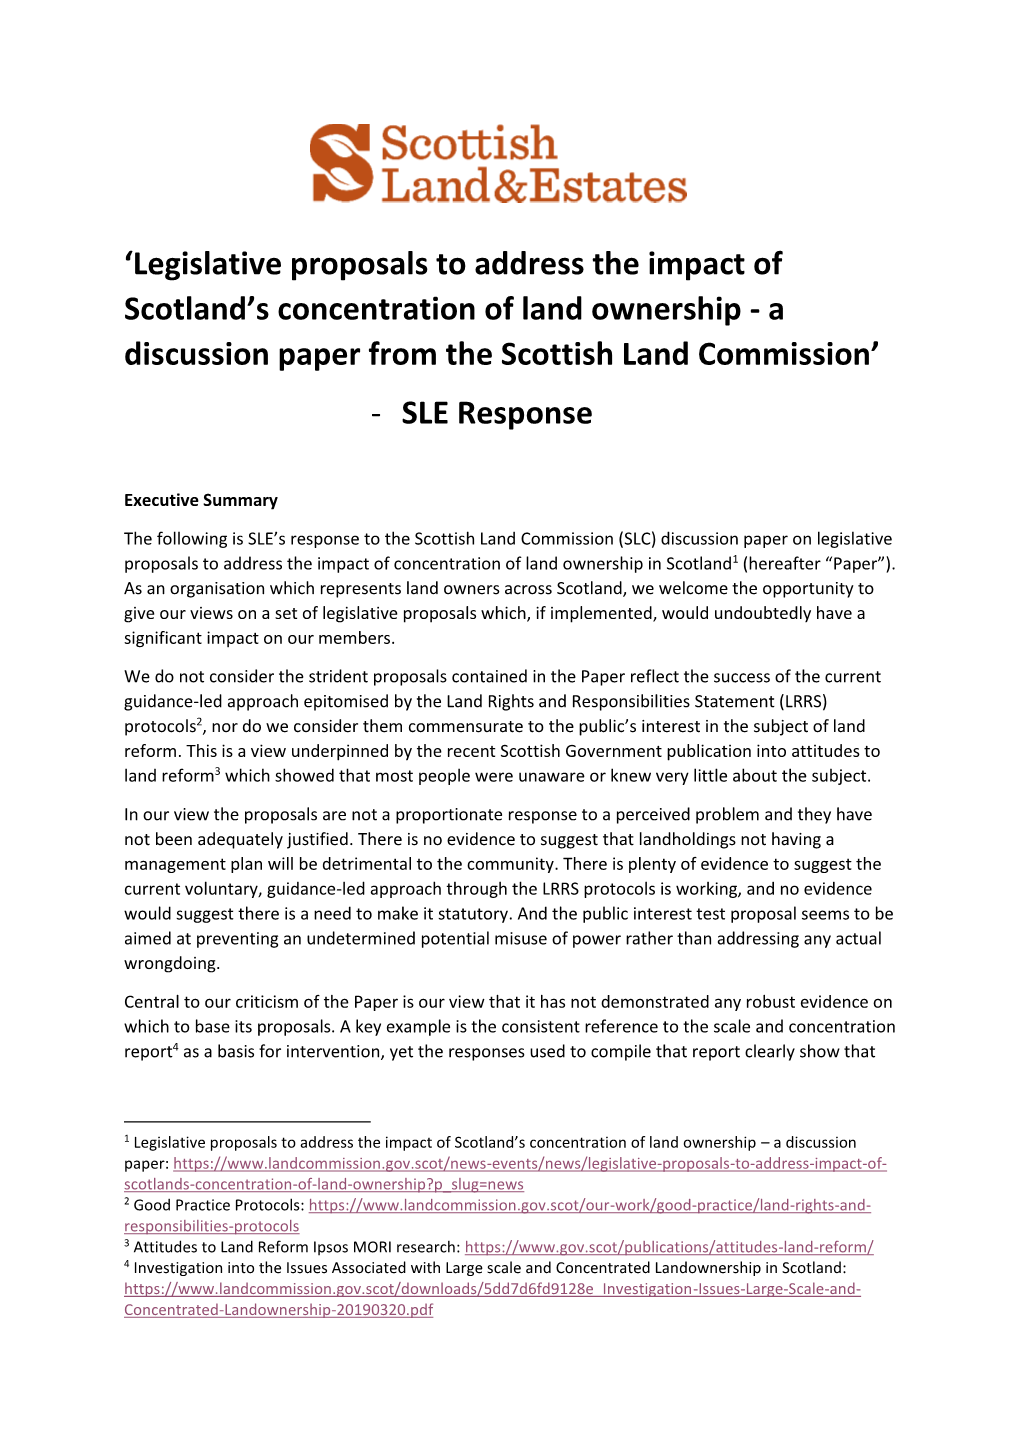 'Legislative Proposals to Address the Impact Of